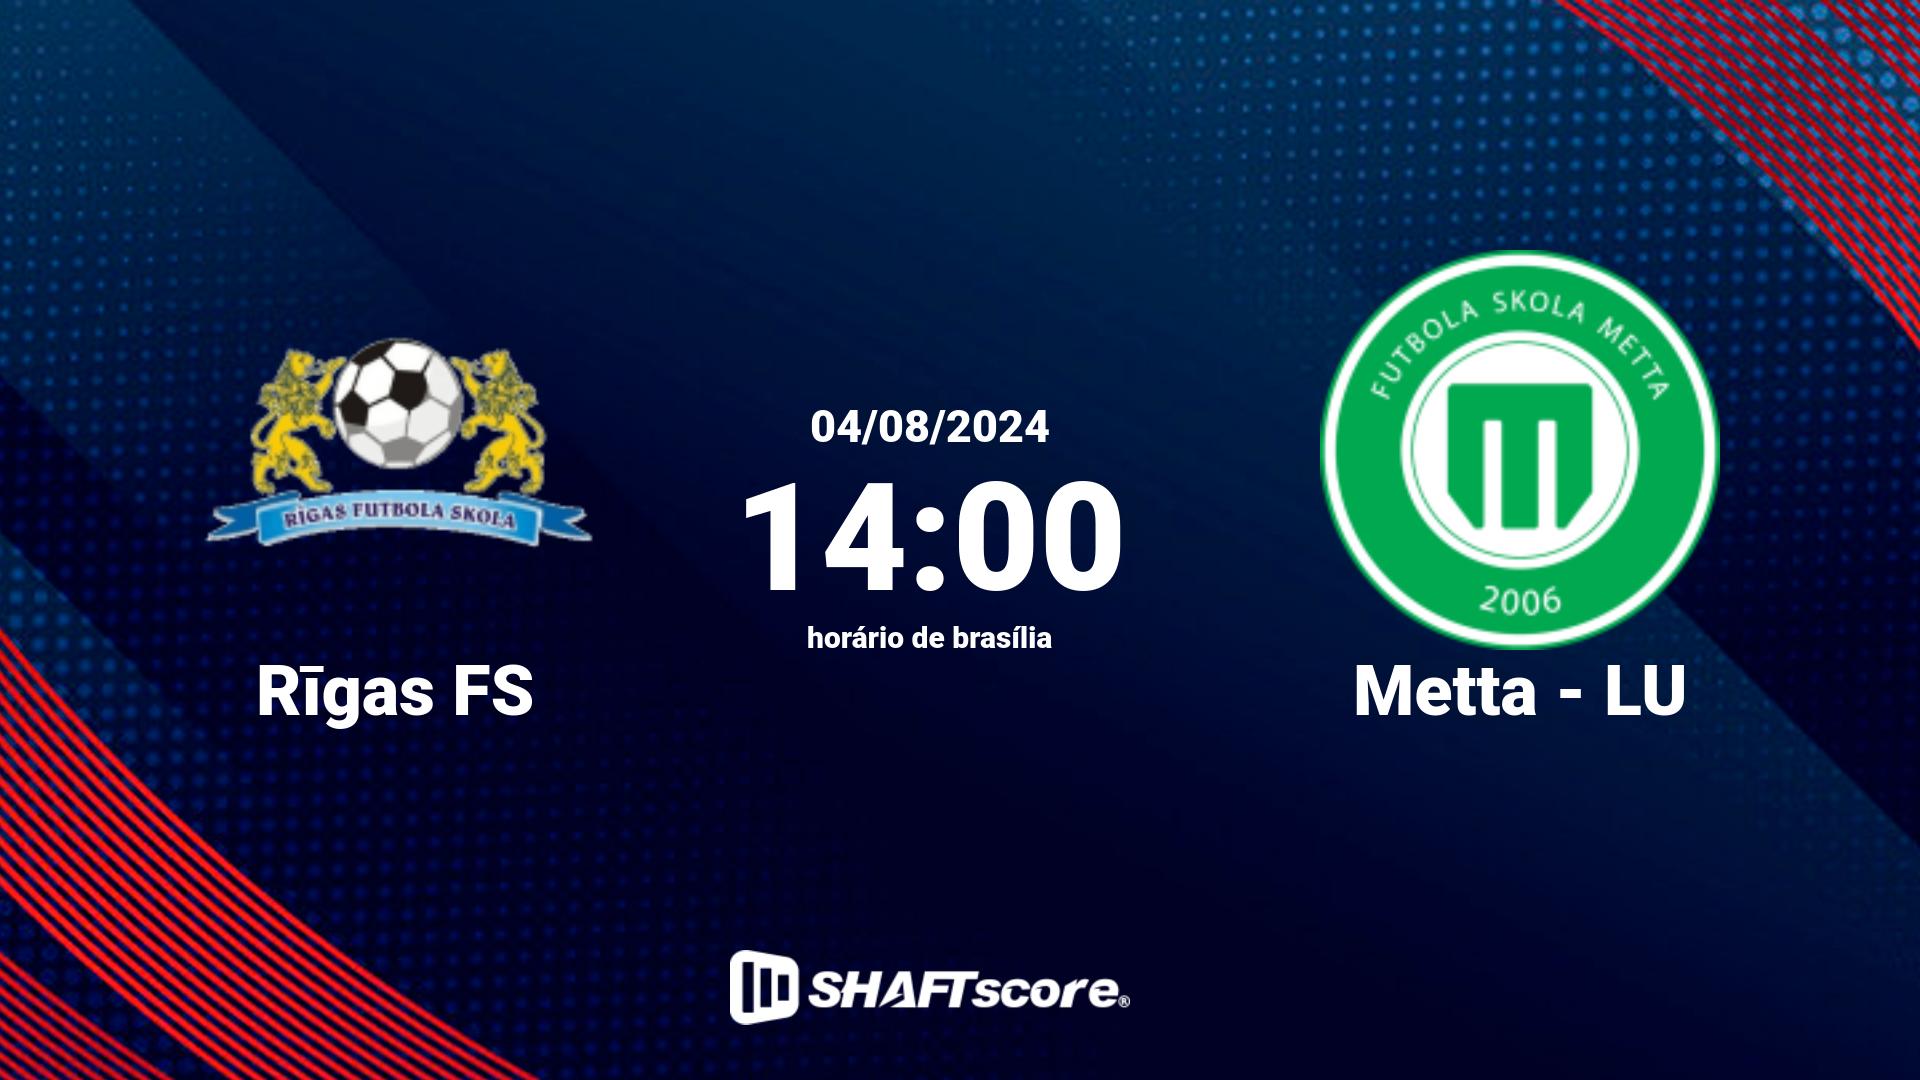 Estatísticas do jogo Rīgas FS vs Metta - LU 04.08 14:00